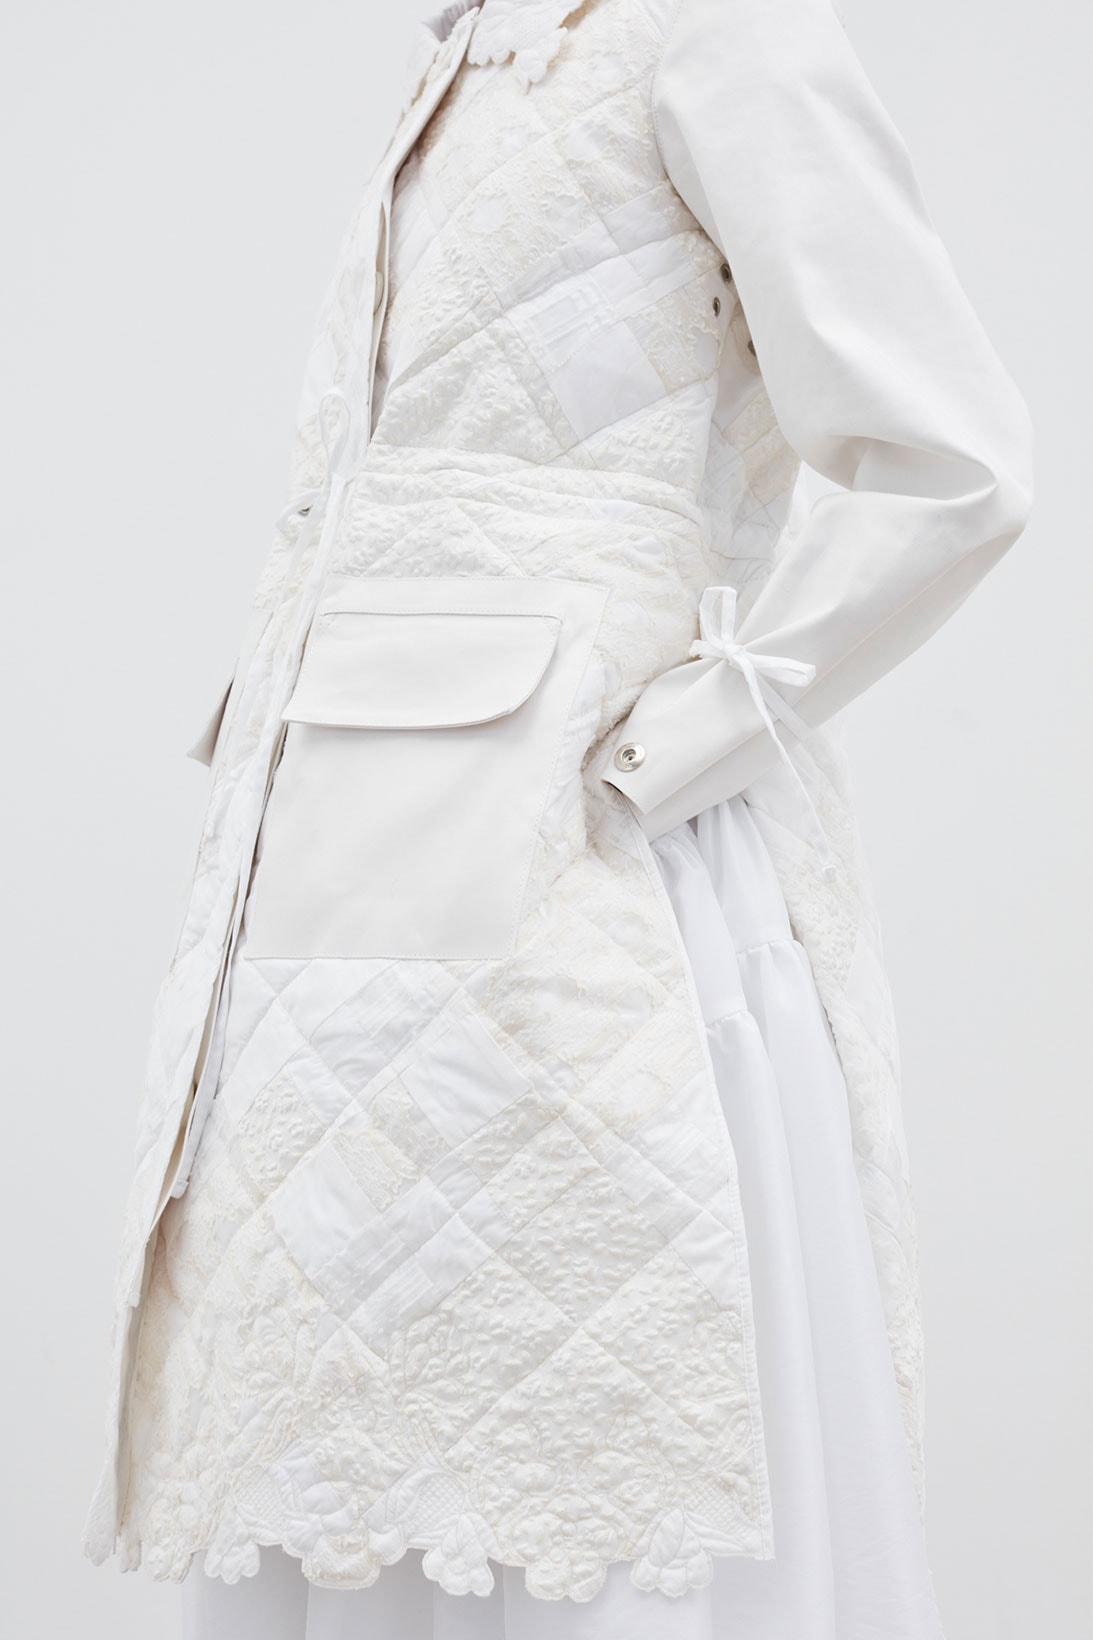 mackintosh cecilie bahnsen collaboration hanger white coat dress quilted details